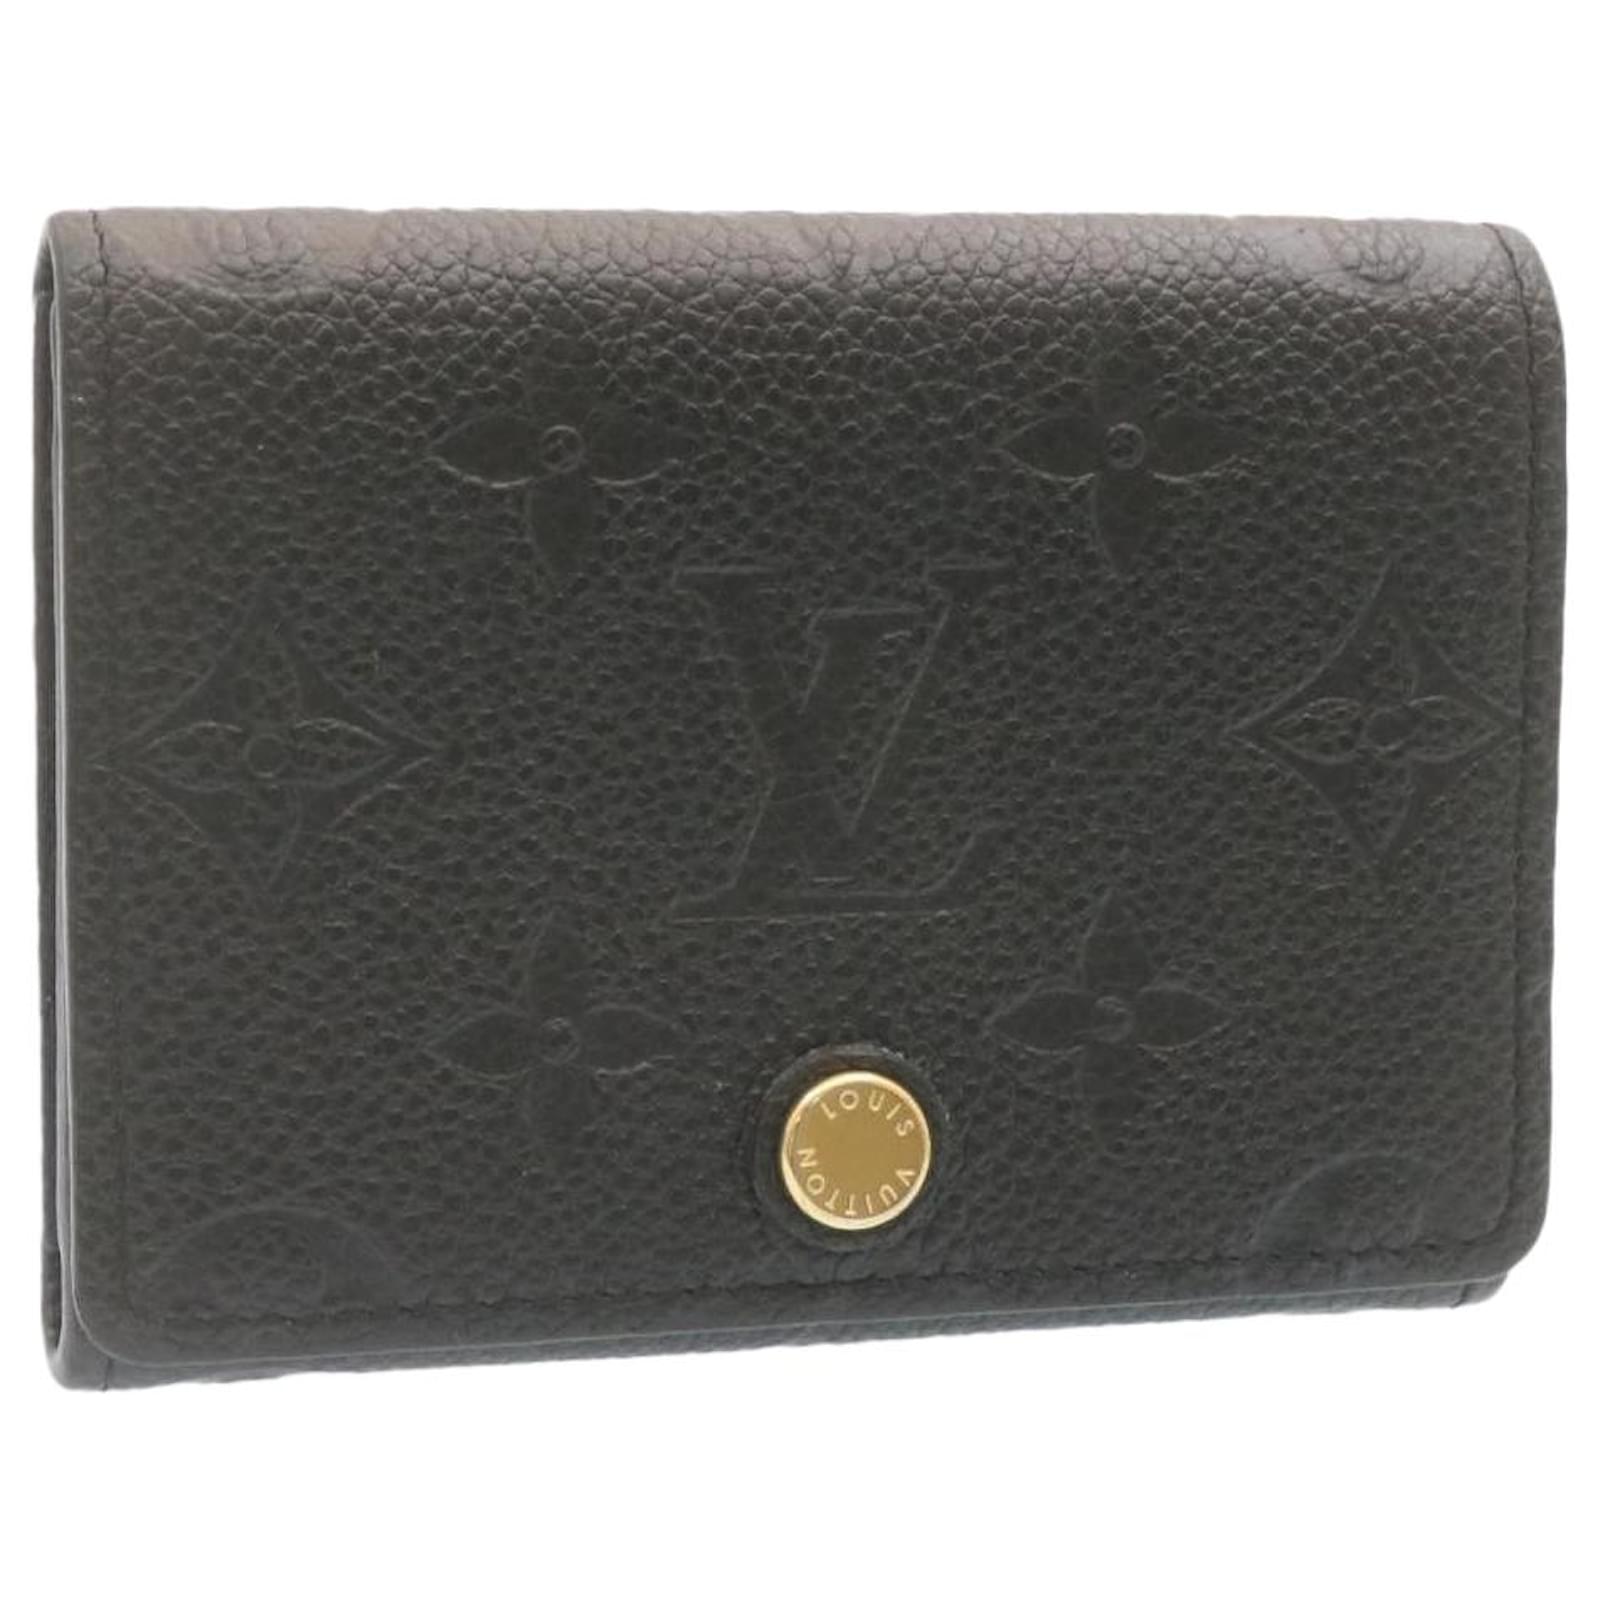 LOUIS VUITTON Monogram Empreinte Anvelope Card Case Black M58456